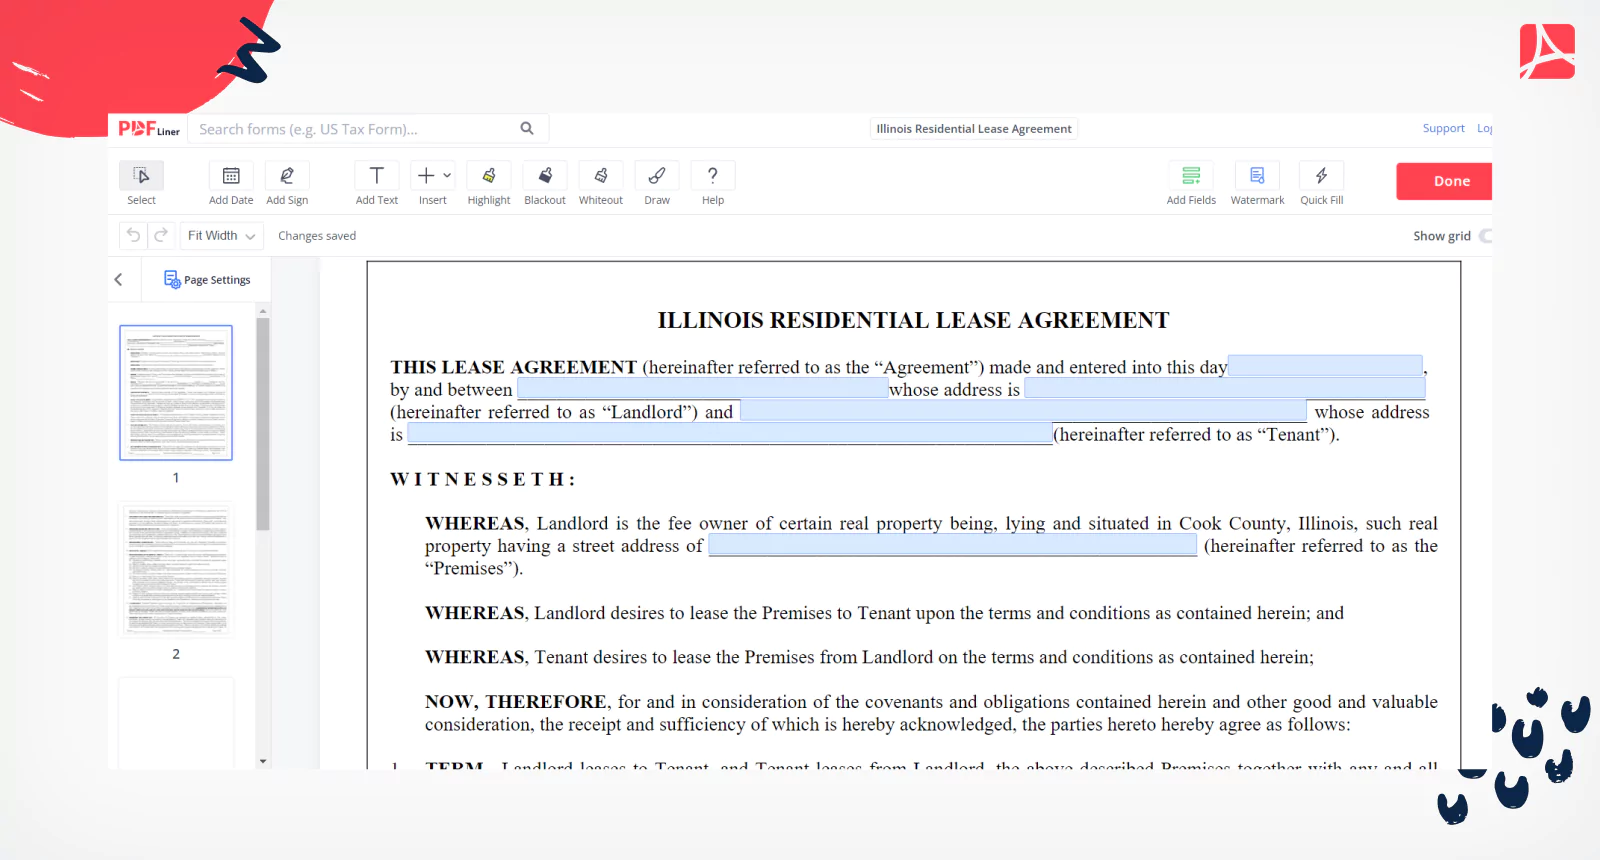 Illinois Residential Lease Agreement on PDFLiner